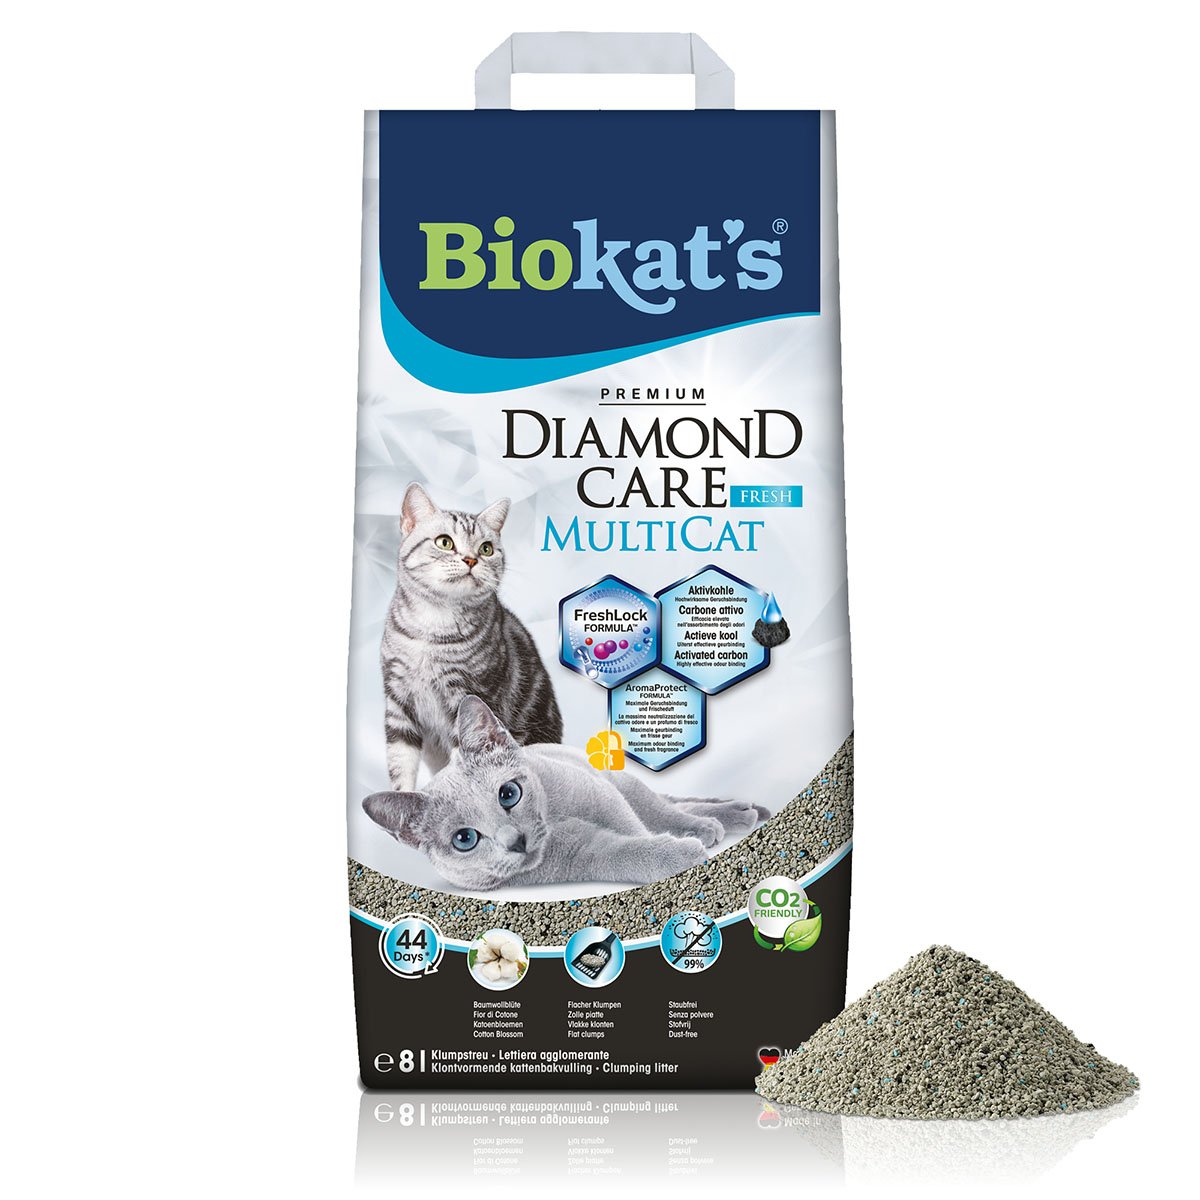 Biokat's Diamond Care MultiCat Fresh 8l von BioKat's